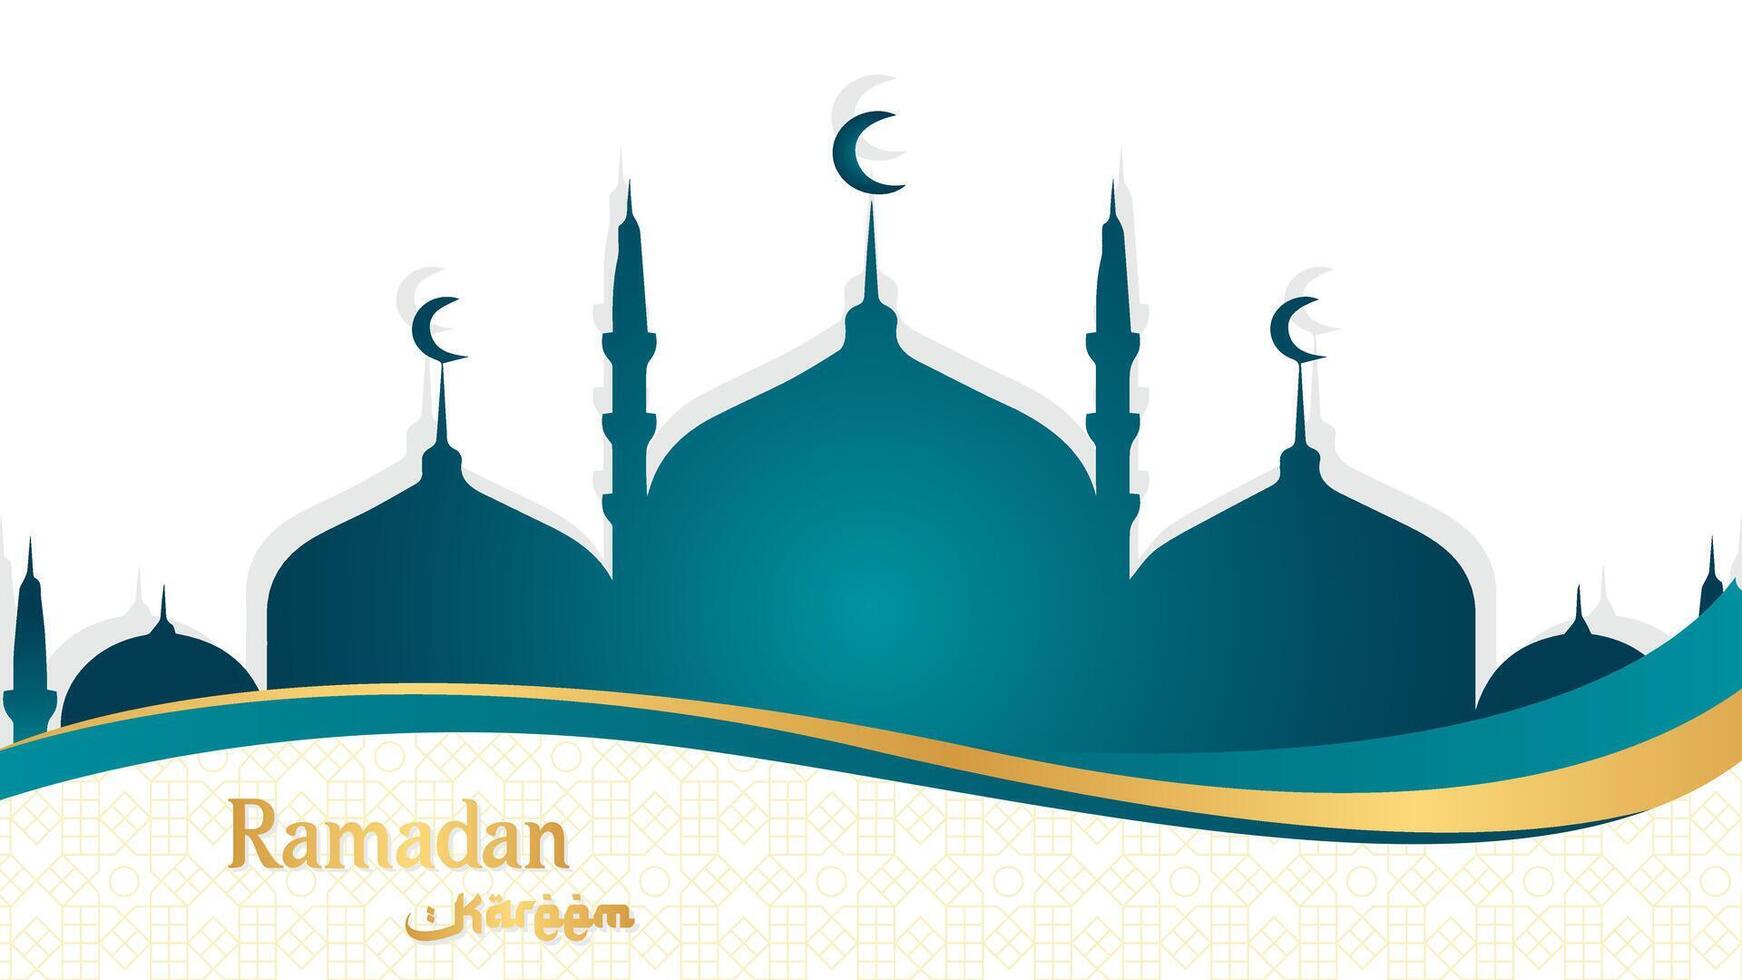 Ramadan Kareem, Islamic background banner template. Mosque illustration vector